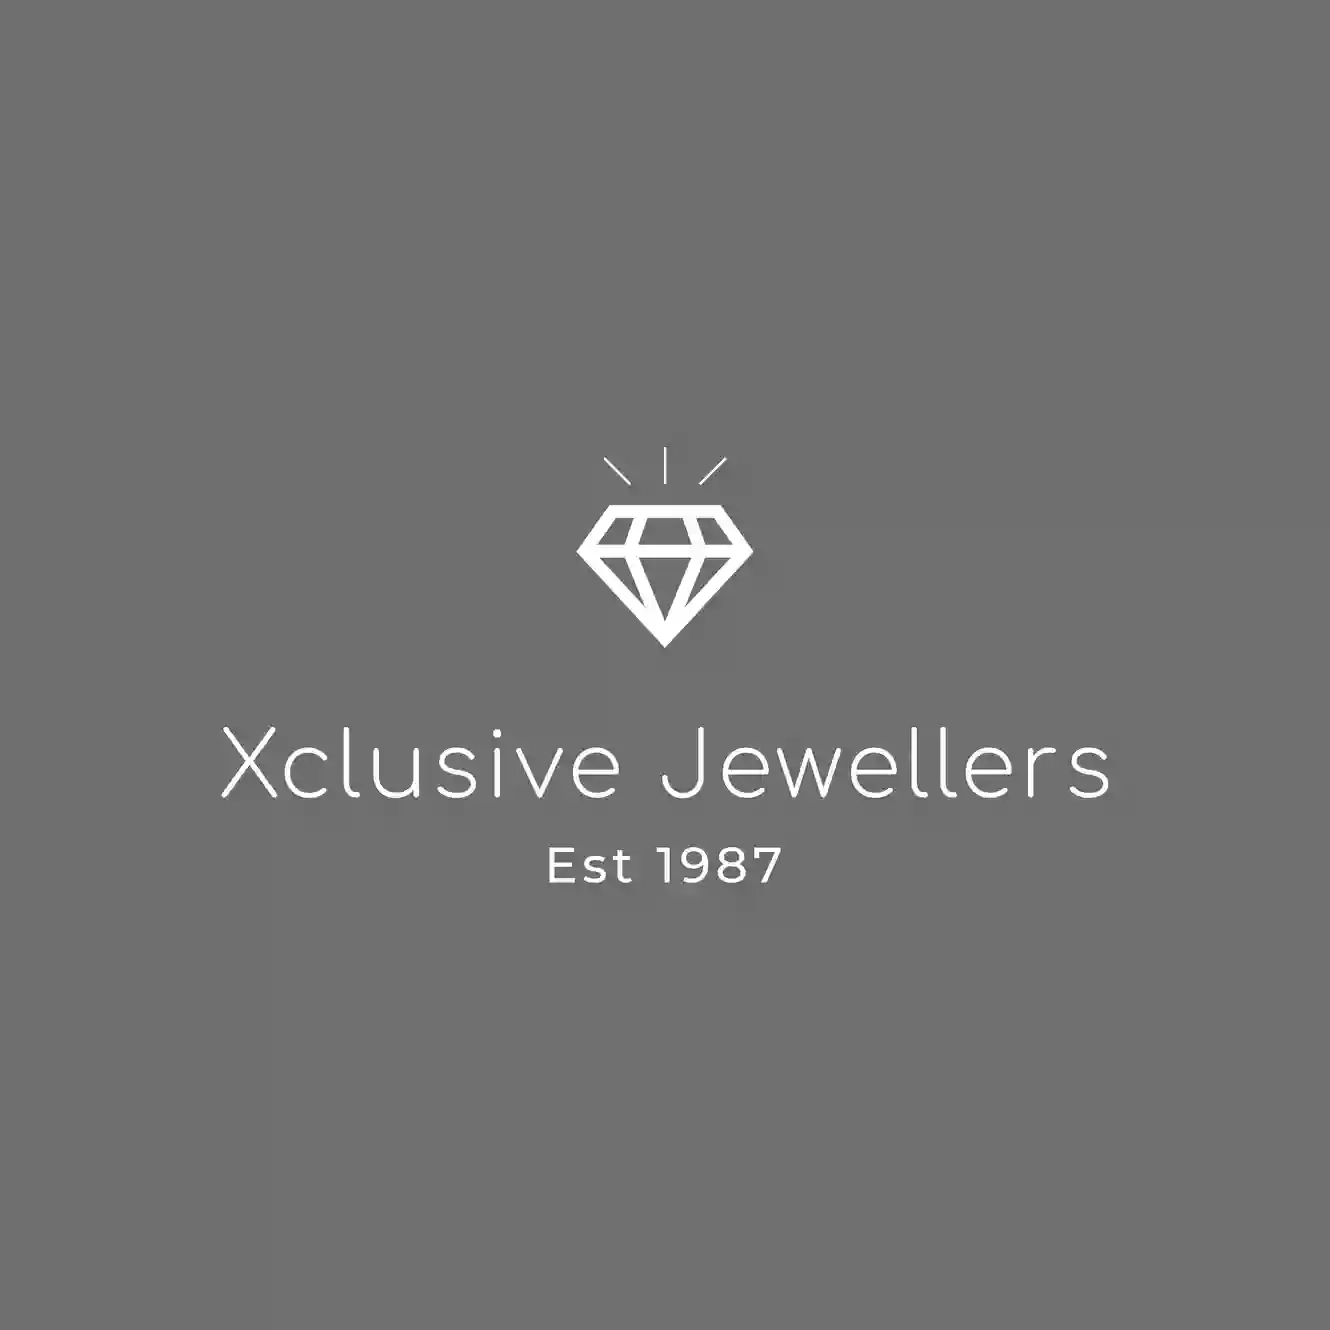 Xclusive Jewellers